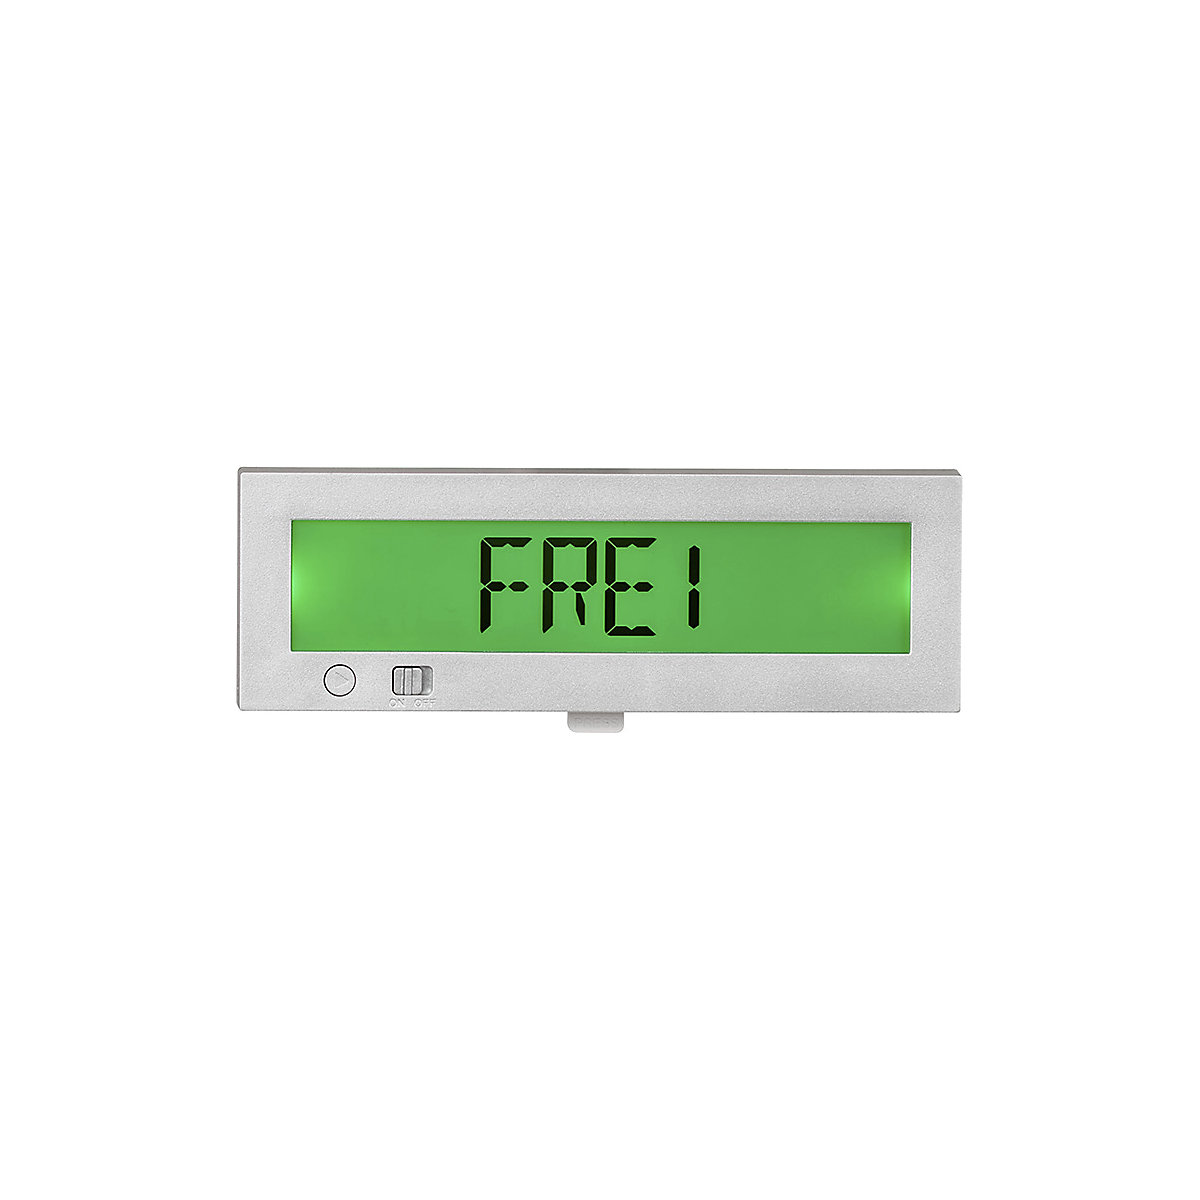 Plaque de porte numérique Go2 «libre» / «occupé»